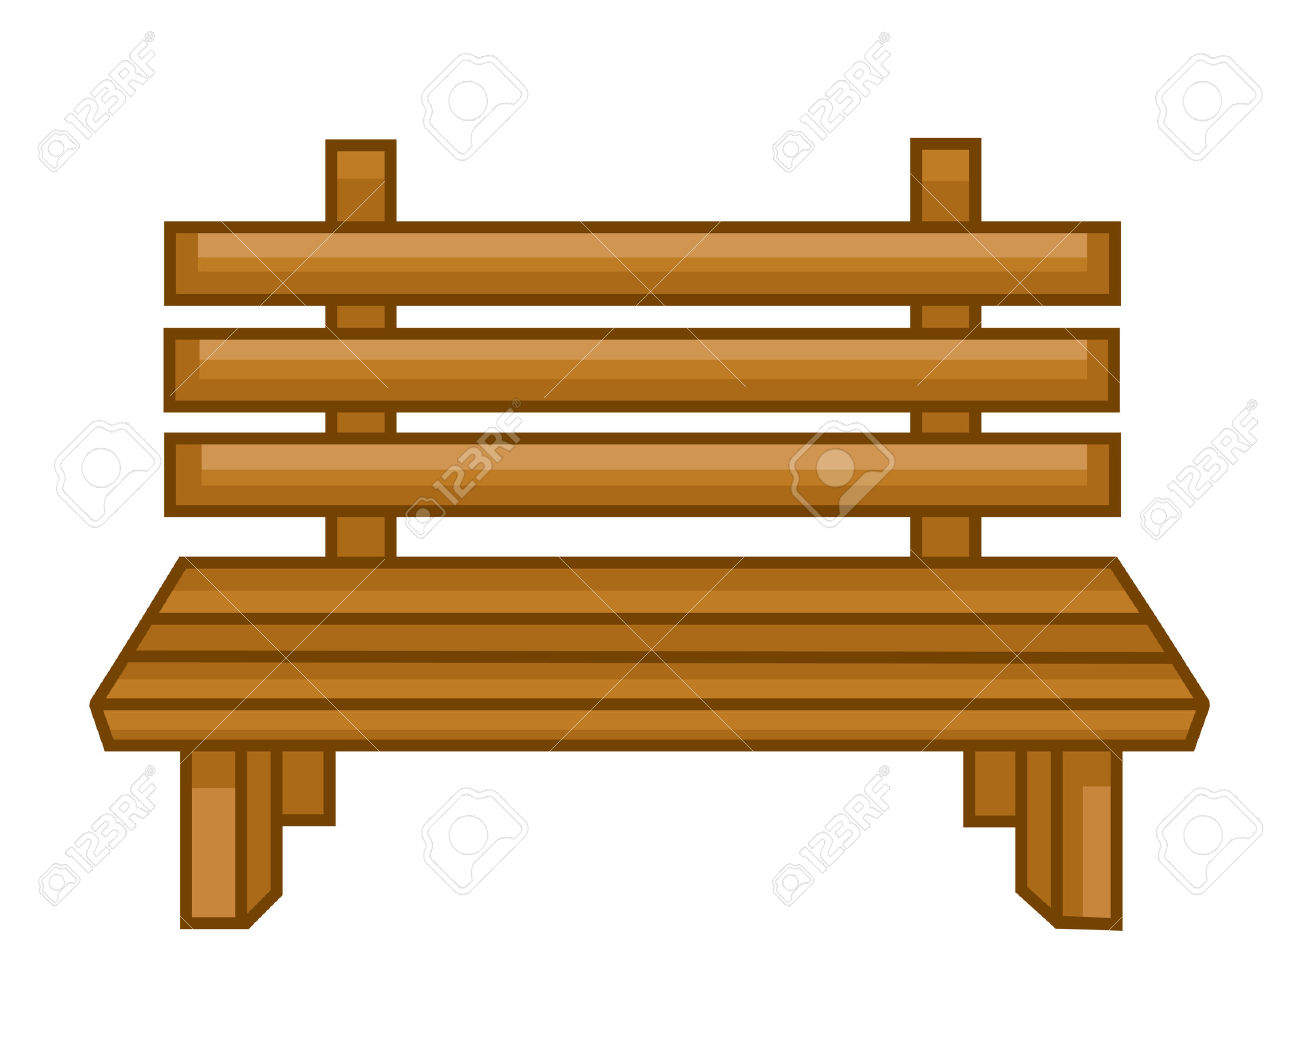 wood furniture clipart - photo #39